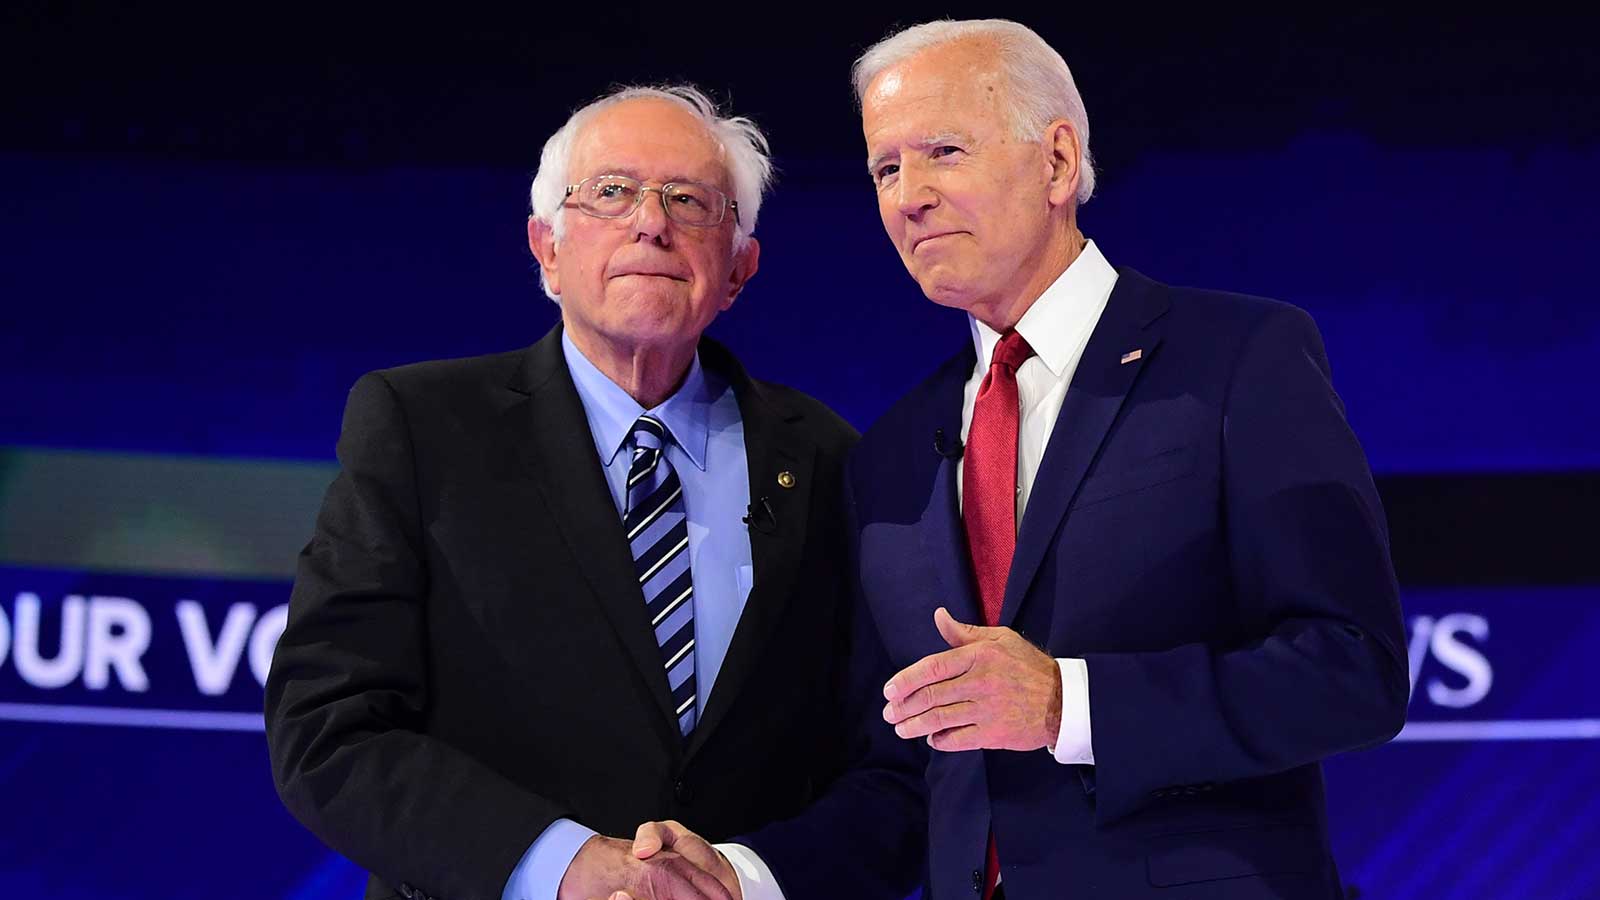 Bernie Sanders and Joe Biden shaking hands